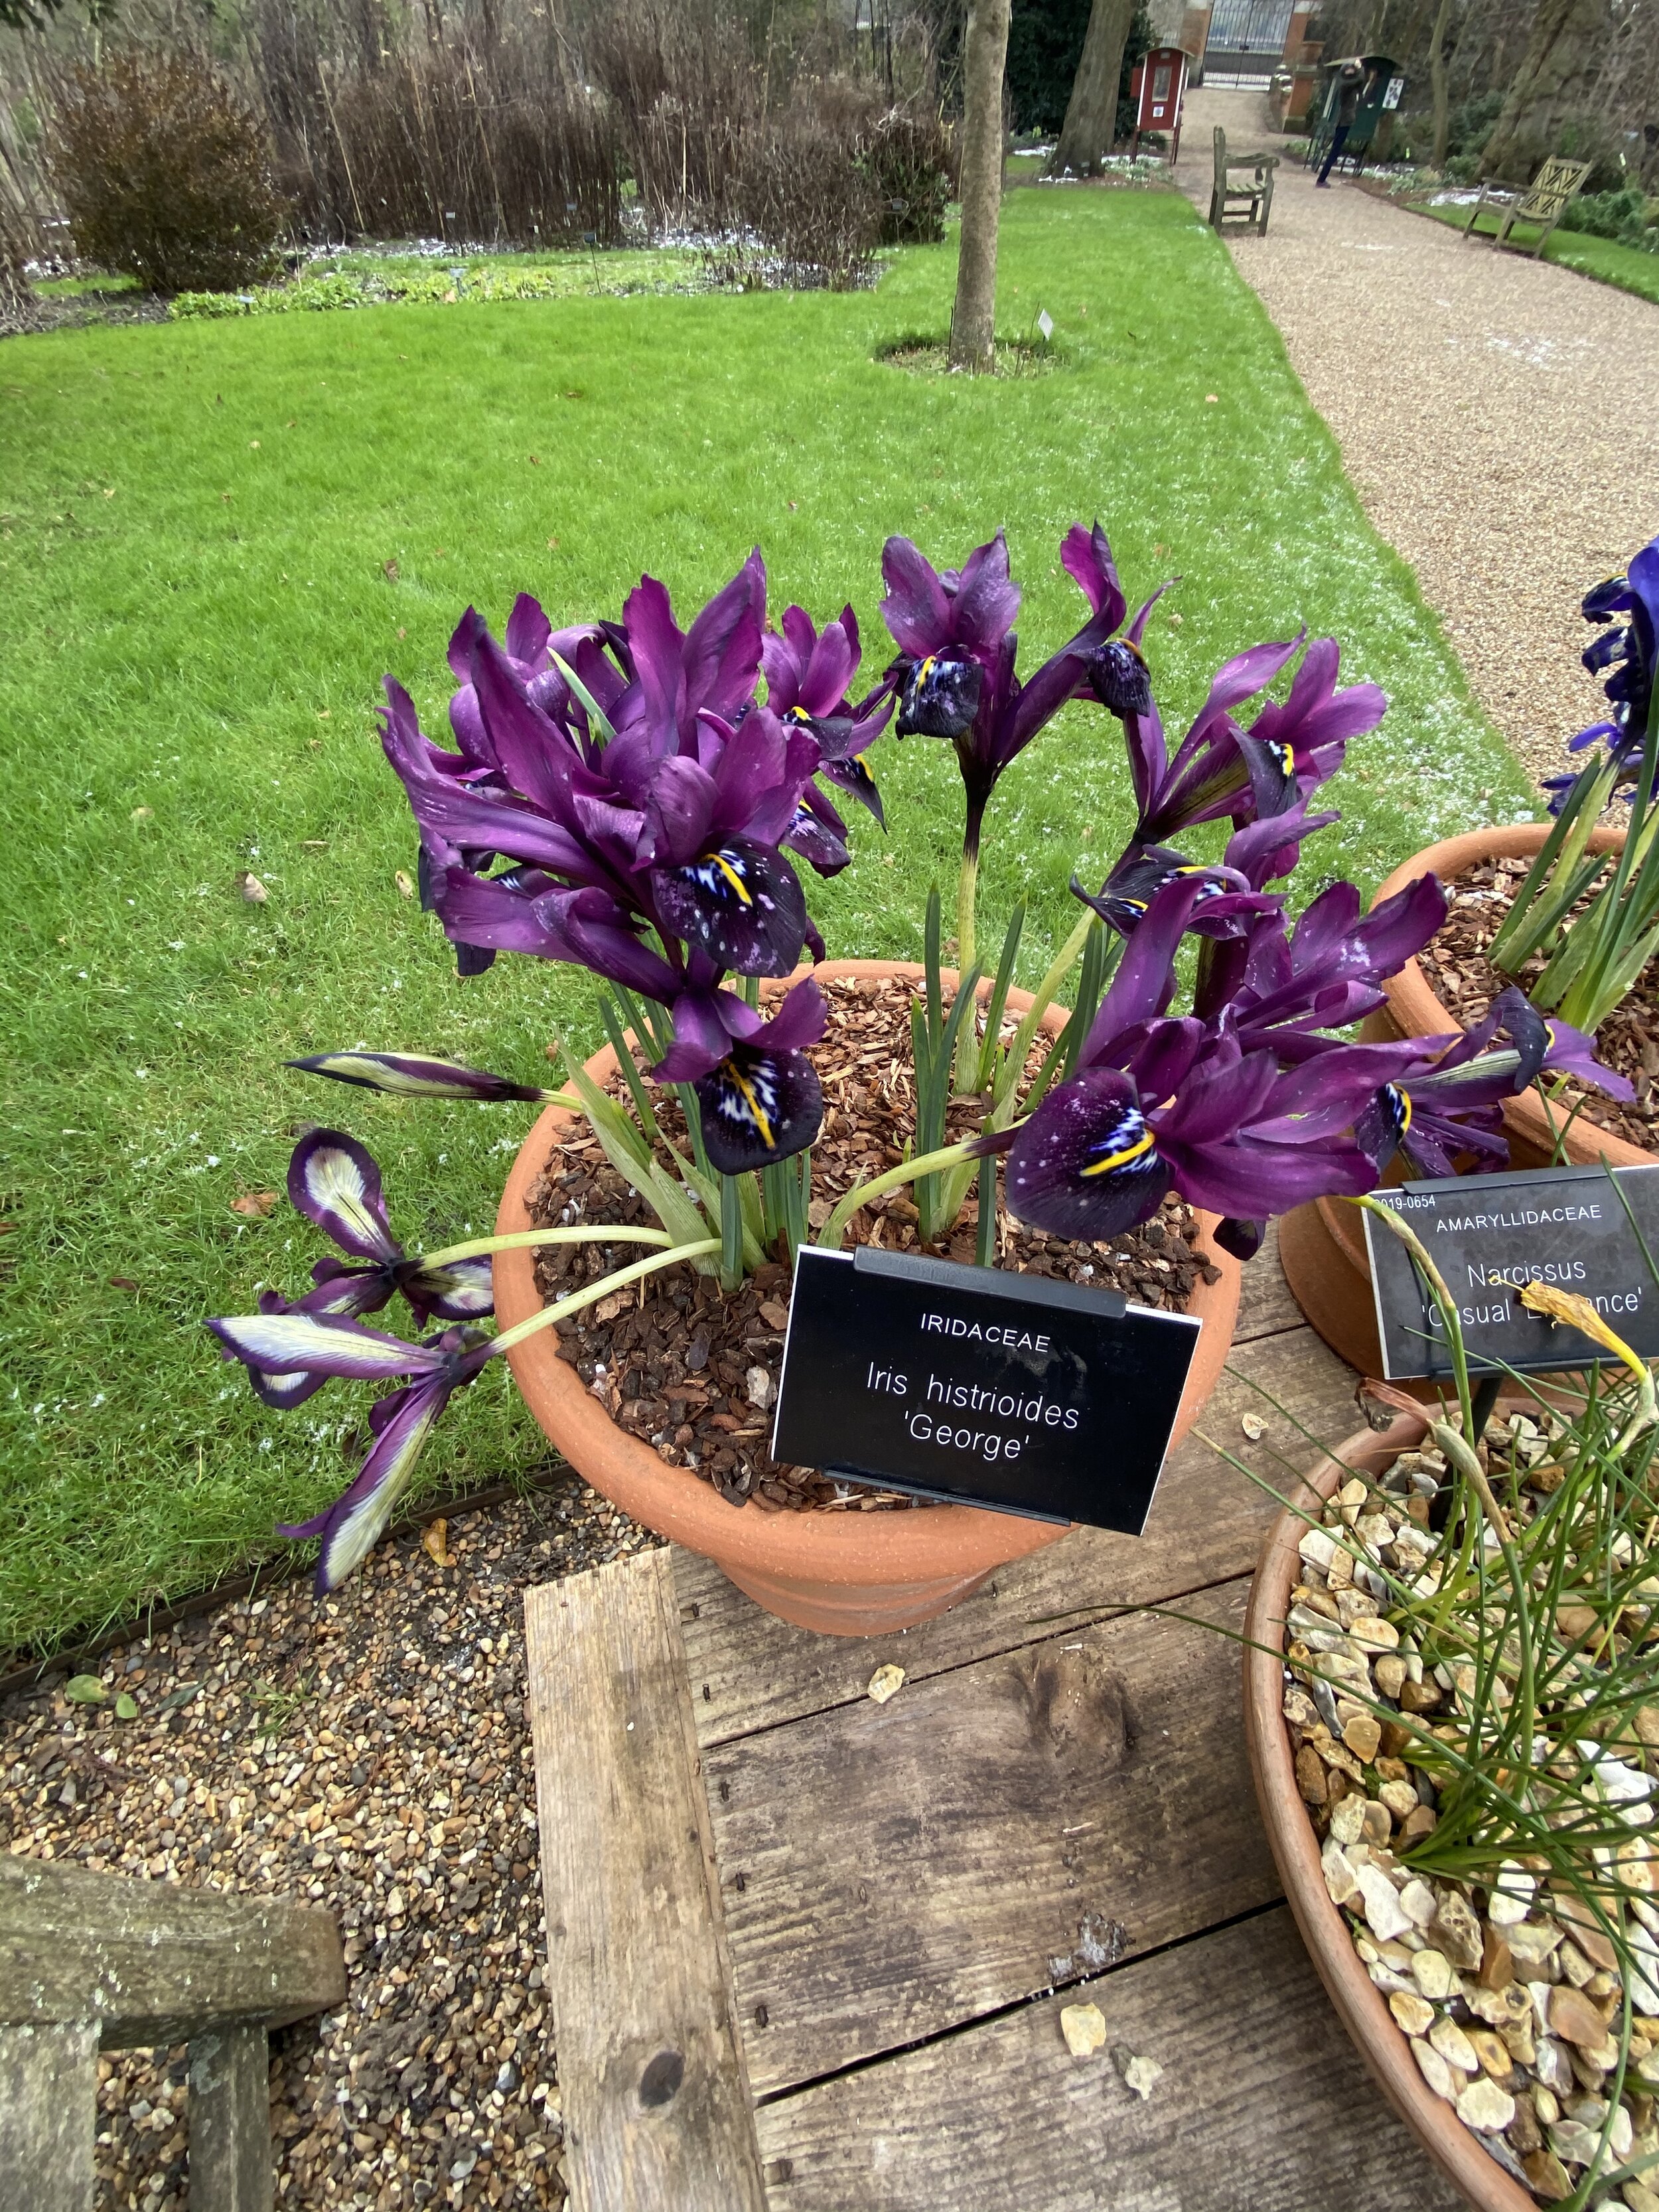 Iris histrioides 'George